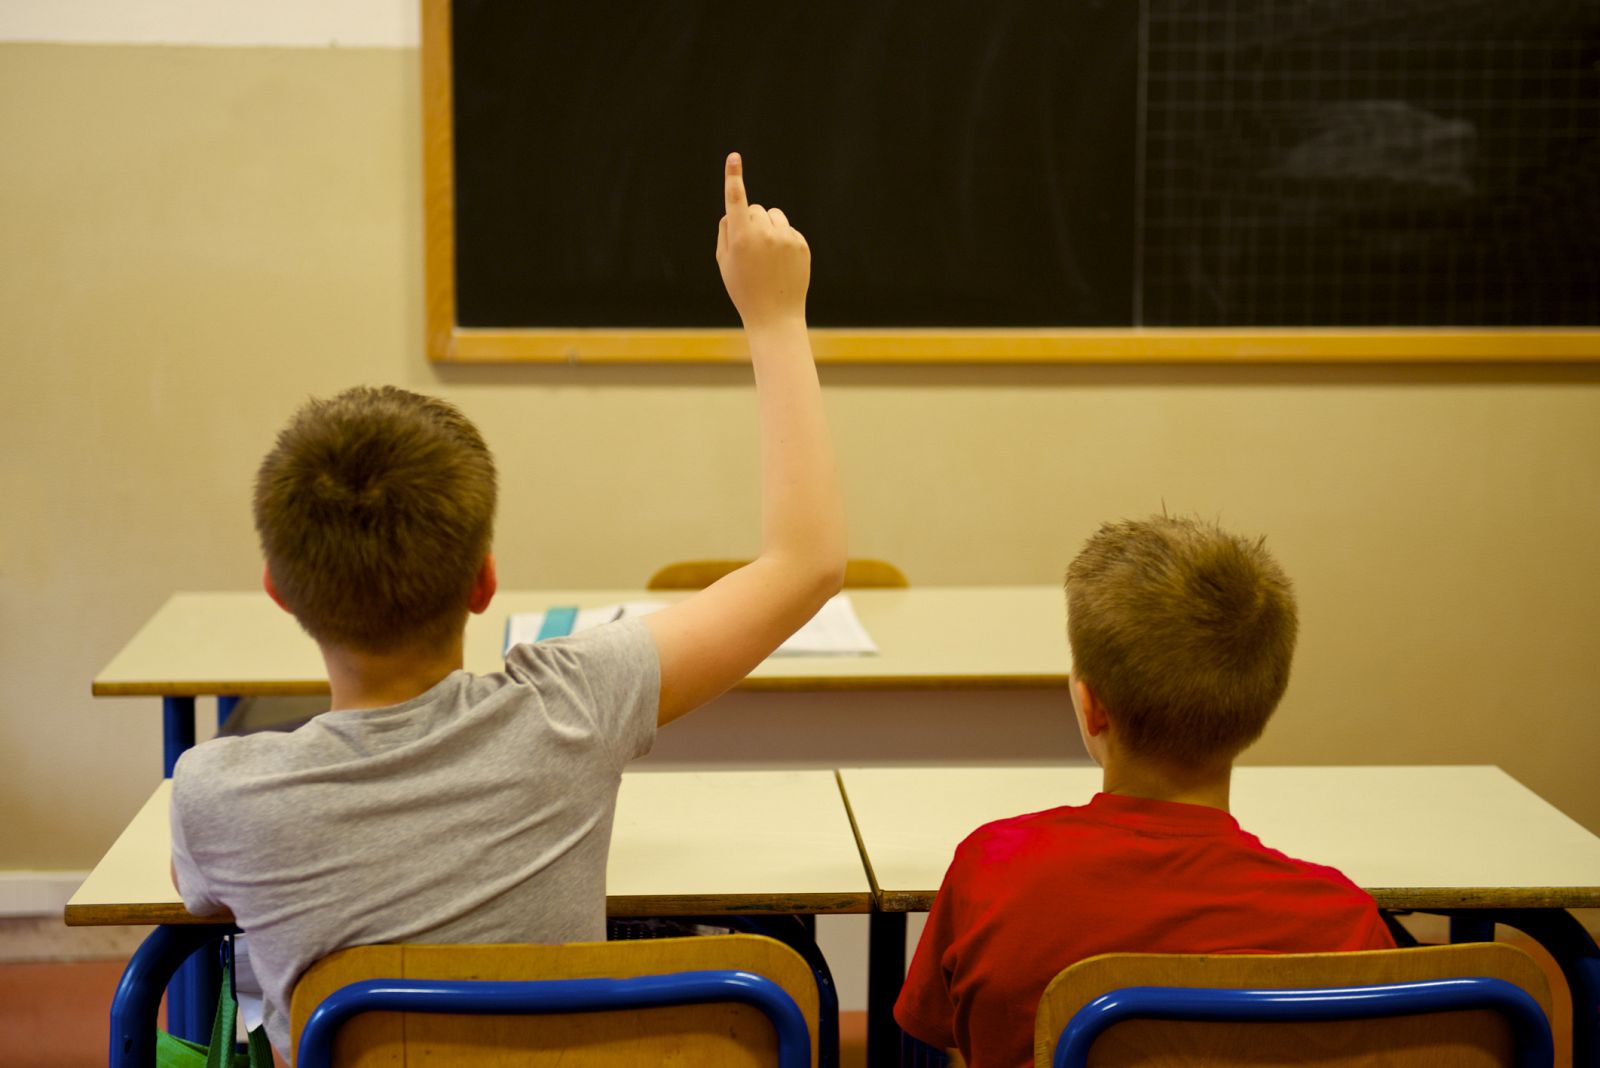 Solo País Vasco presenta niveles "muy altos" de equidad educativa, según Save the Children